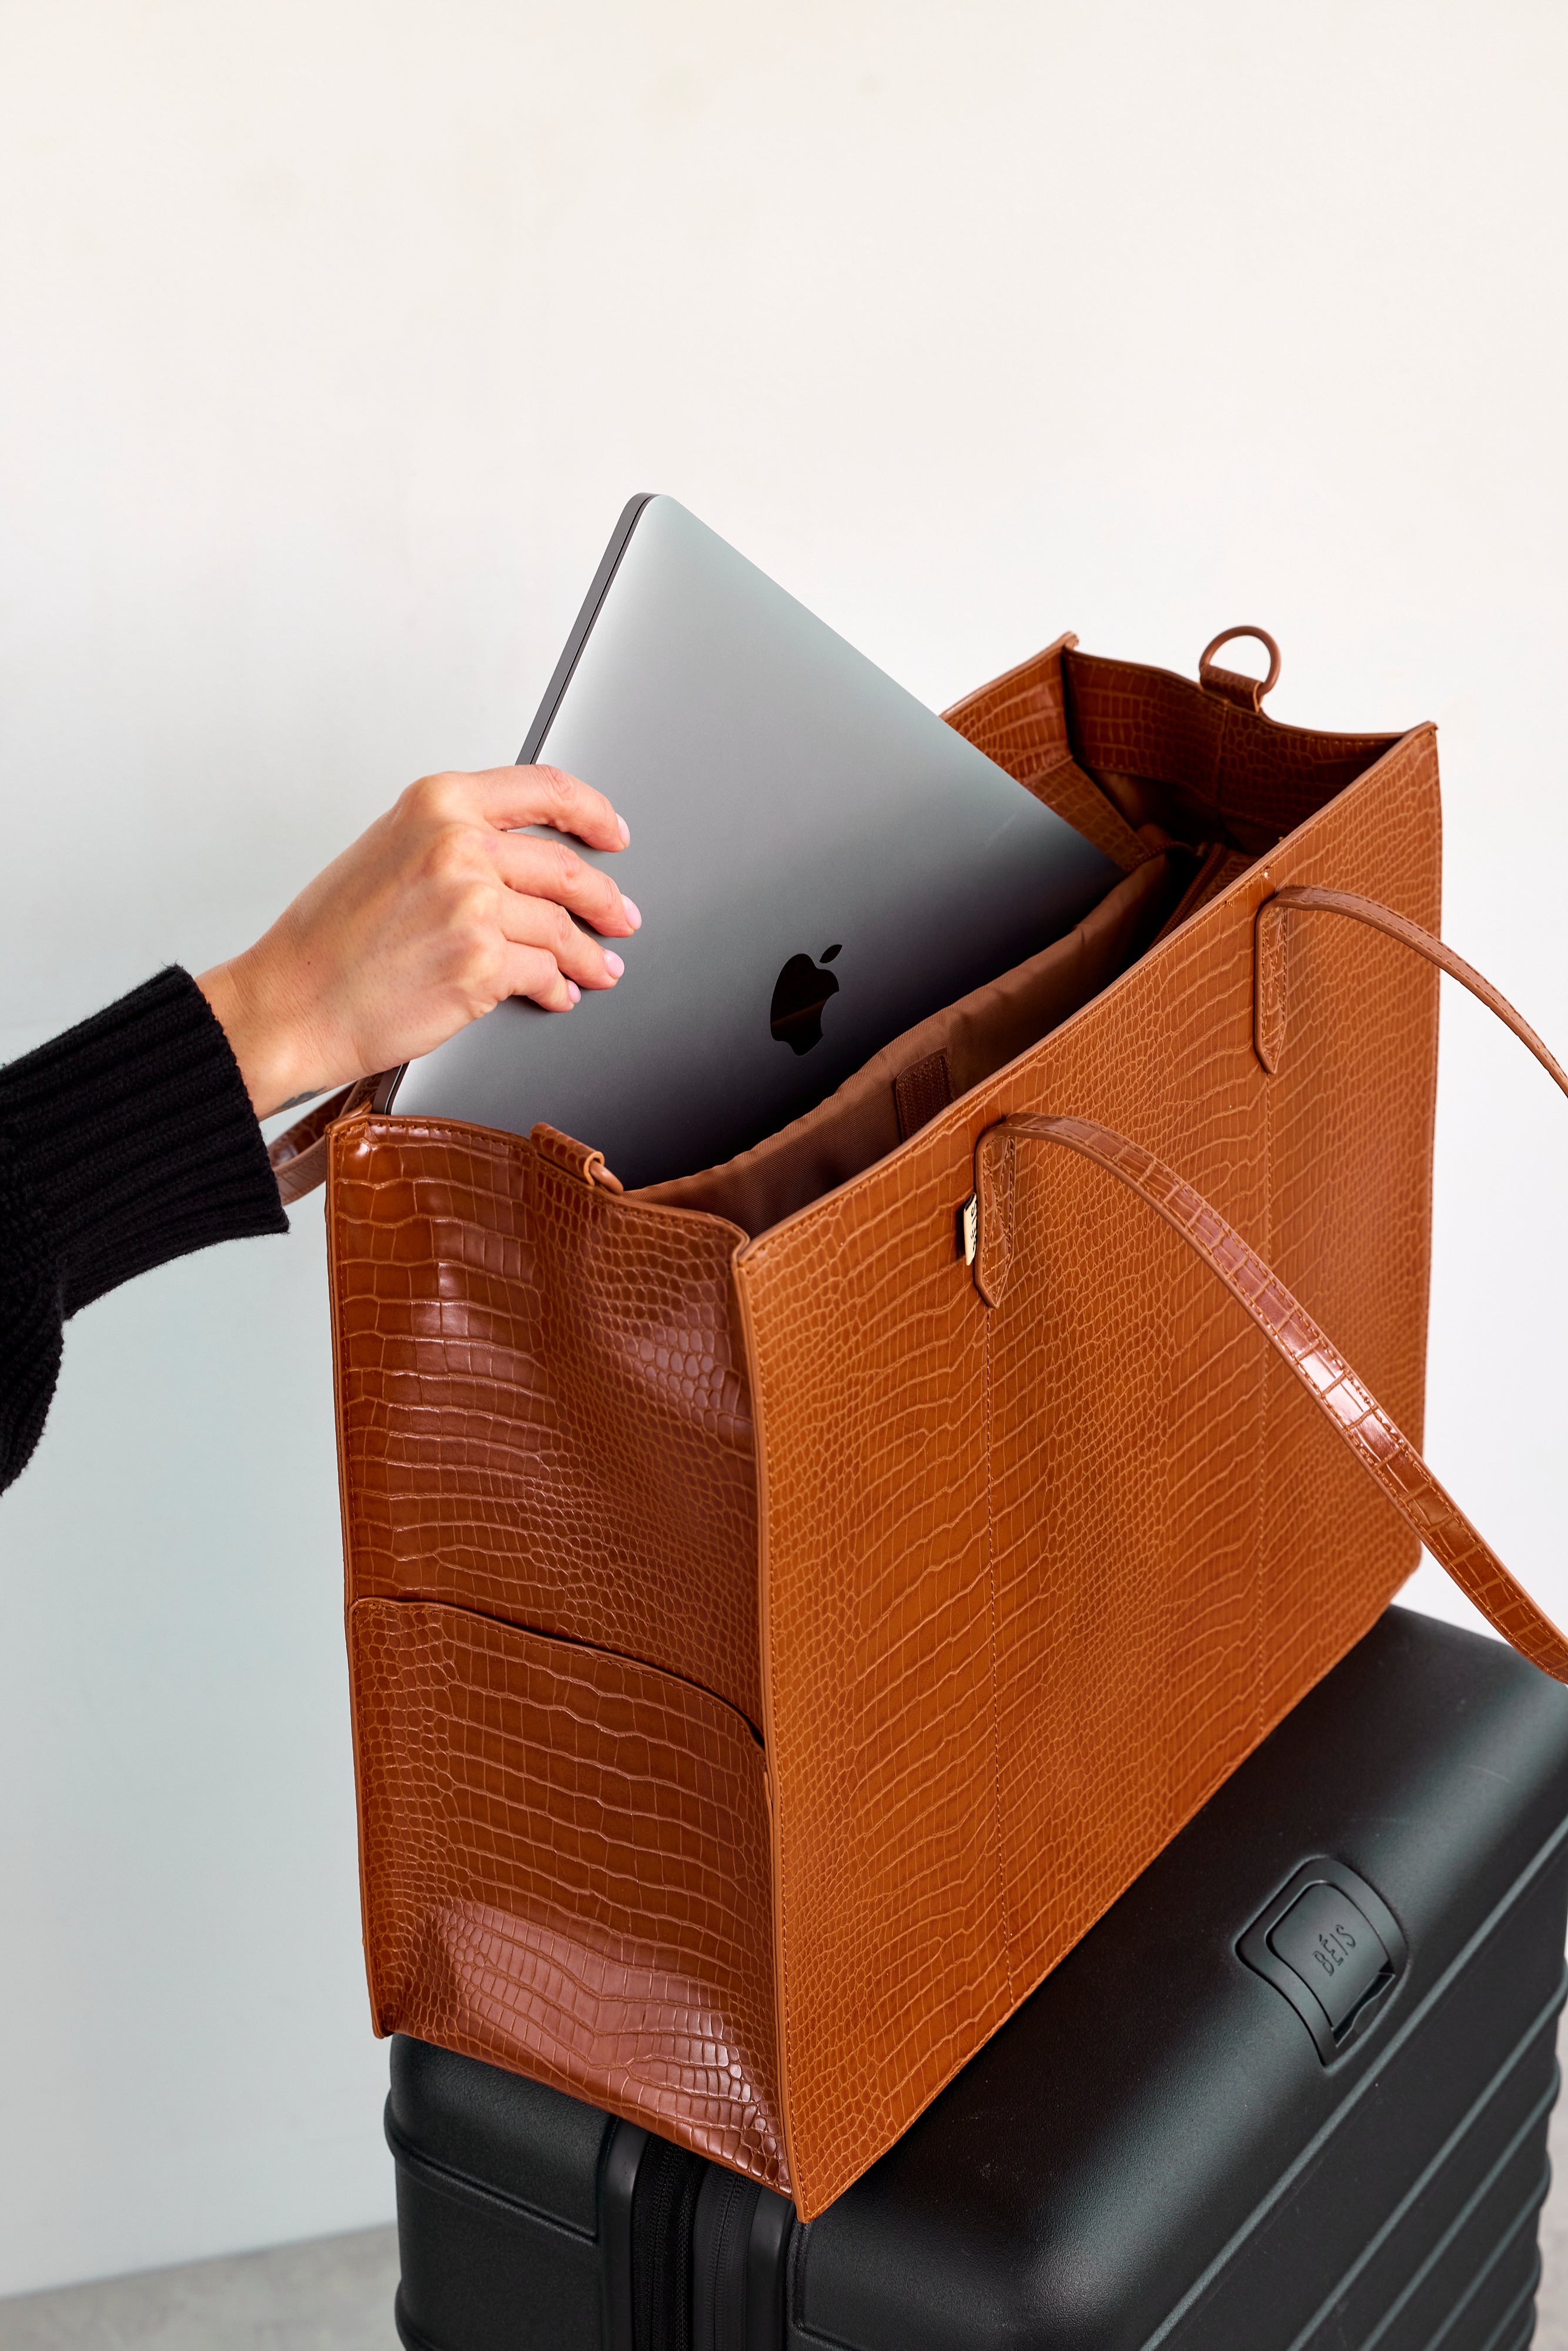 Large Cognac Brown Croc Work Tote - Designer Laptop Bag for Women